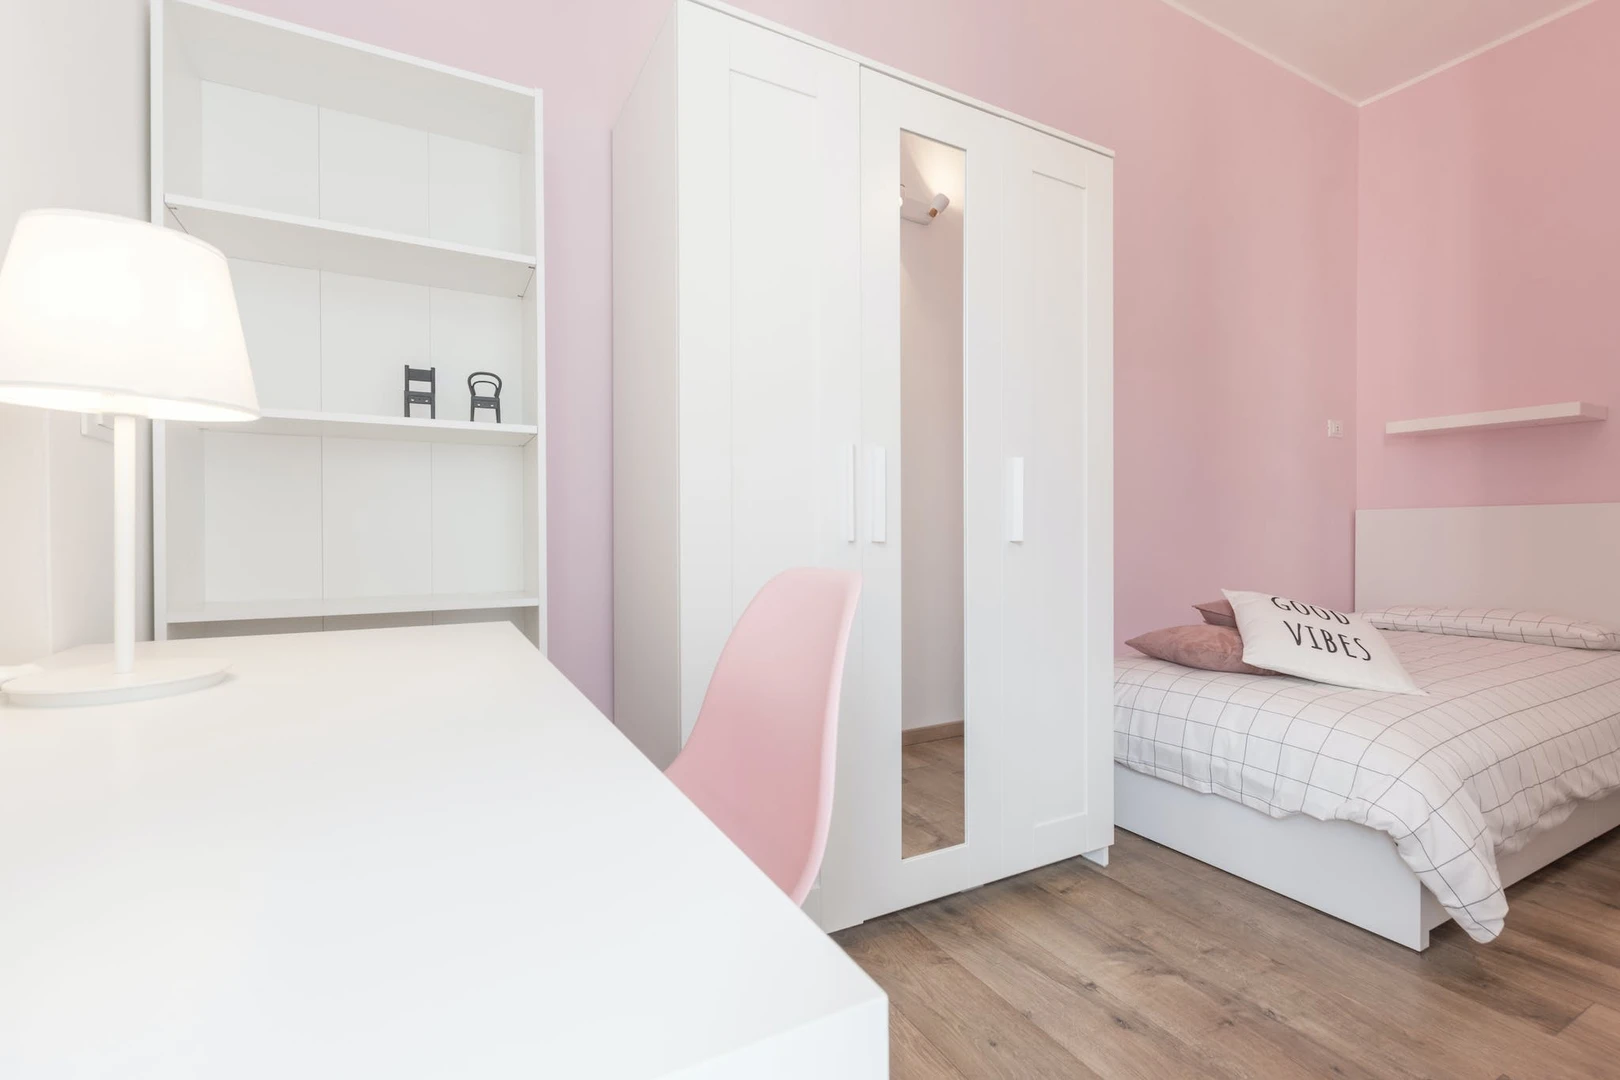 Room for rent in a shared flat in Ferrara